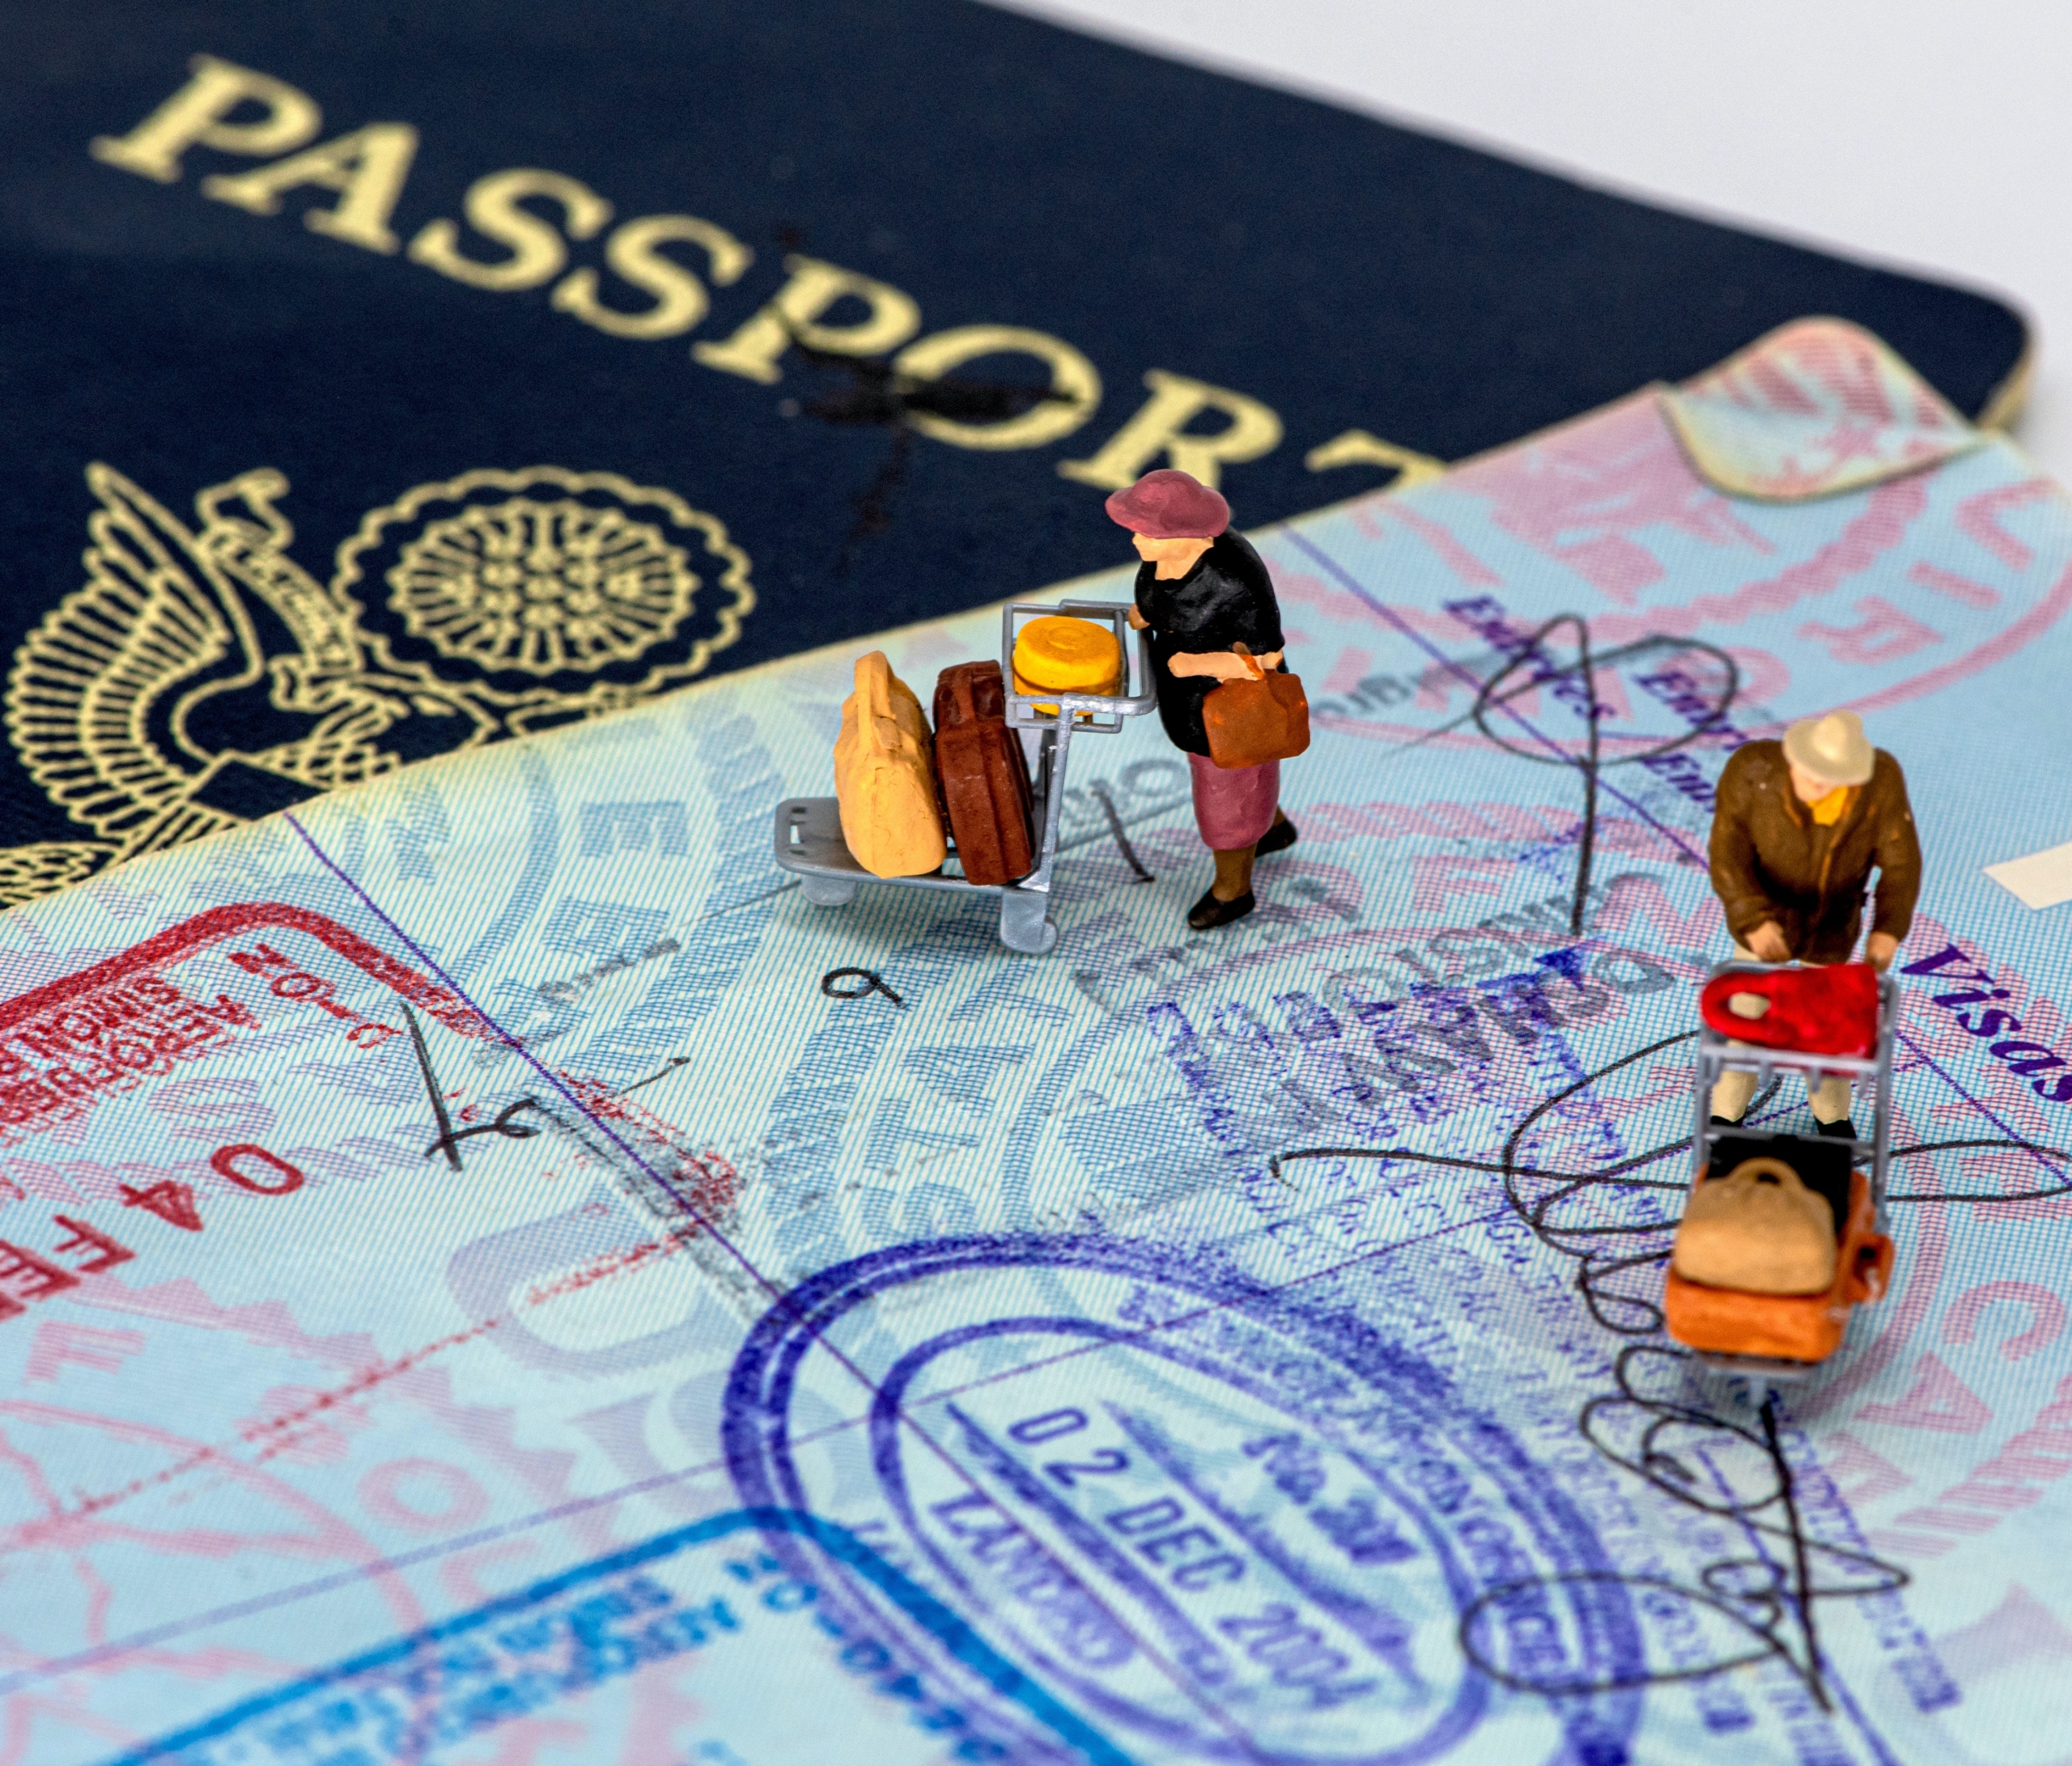 verify-identity-check-passport